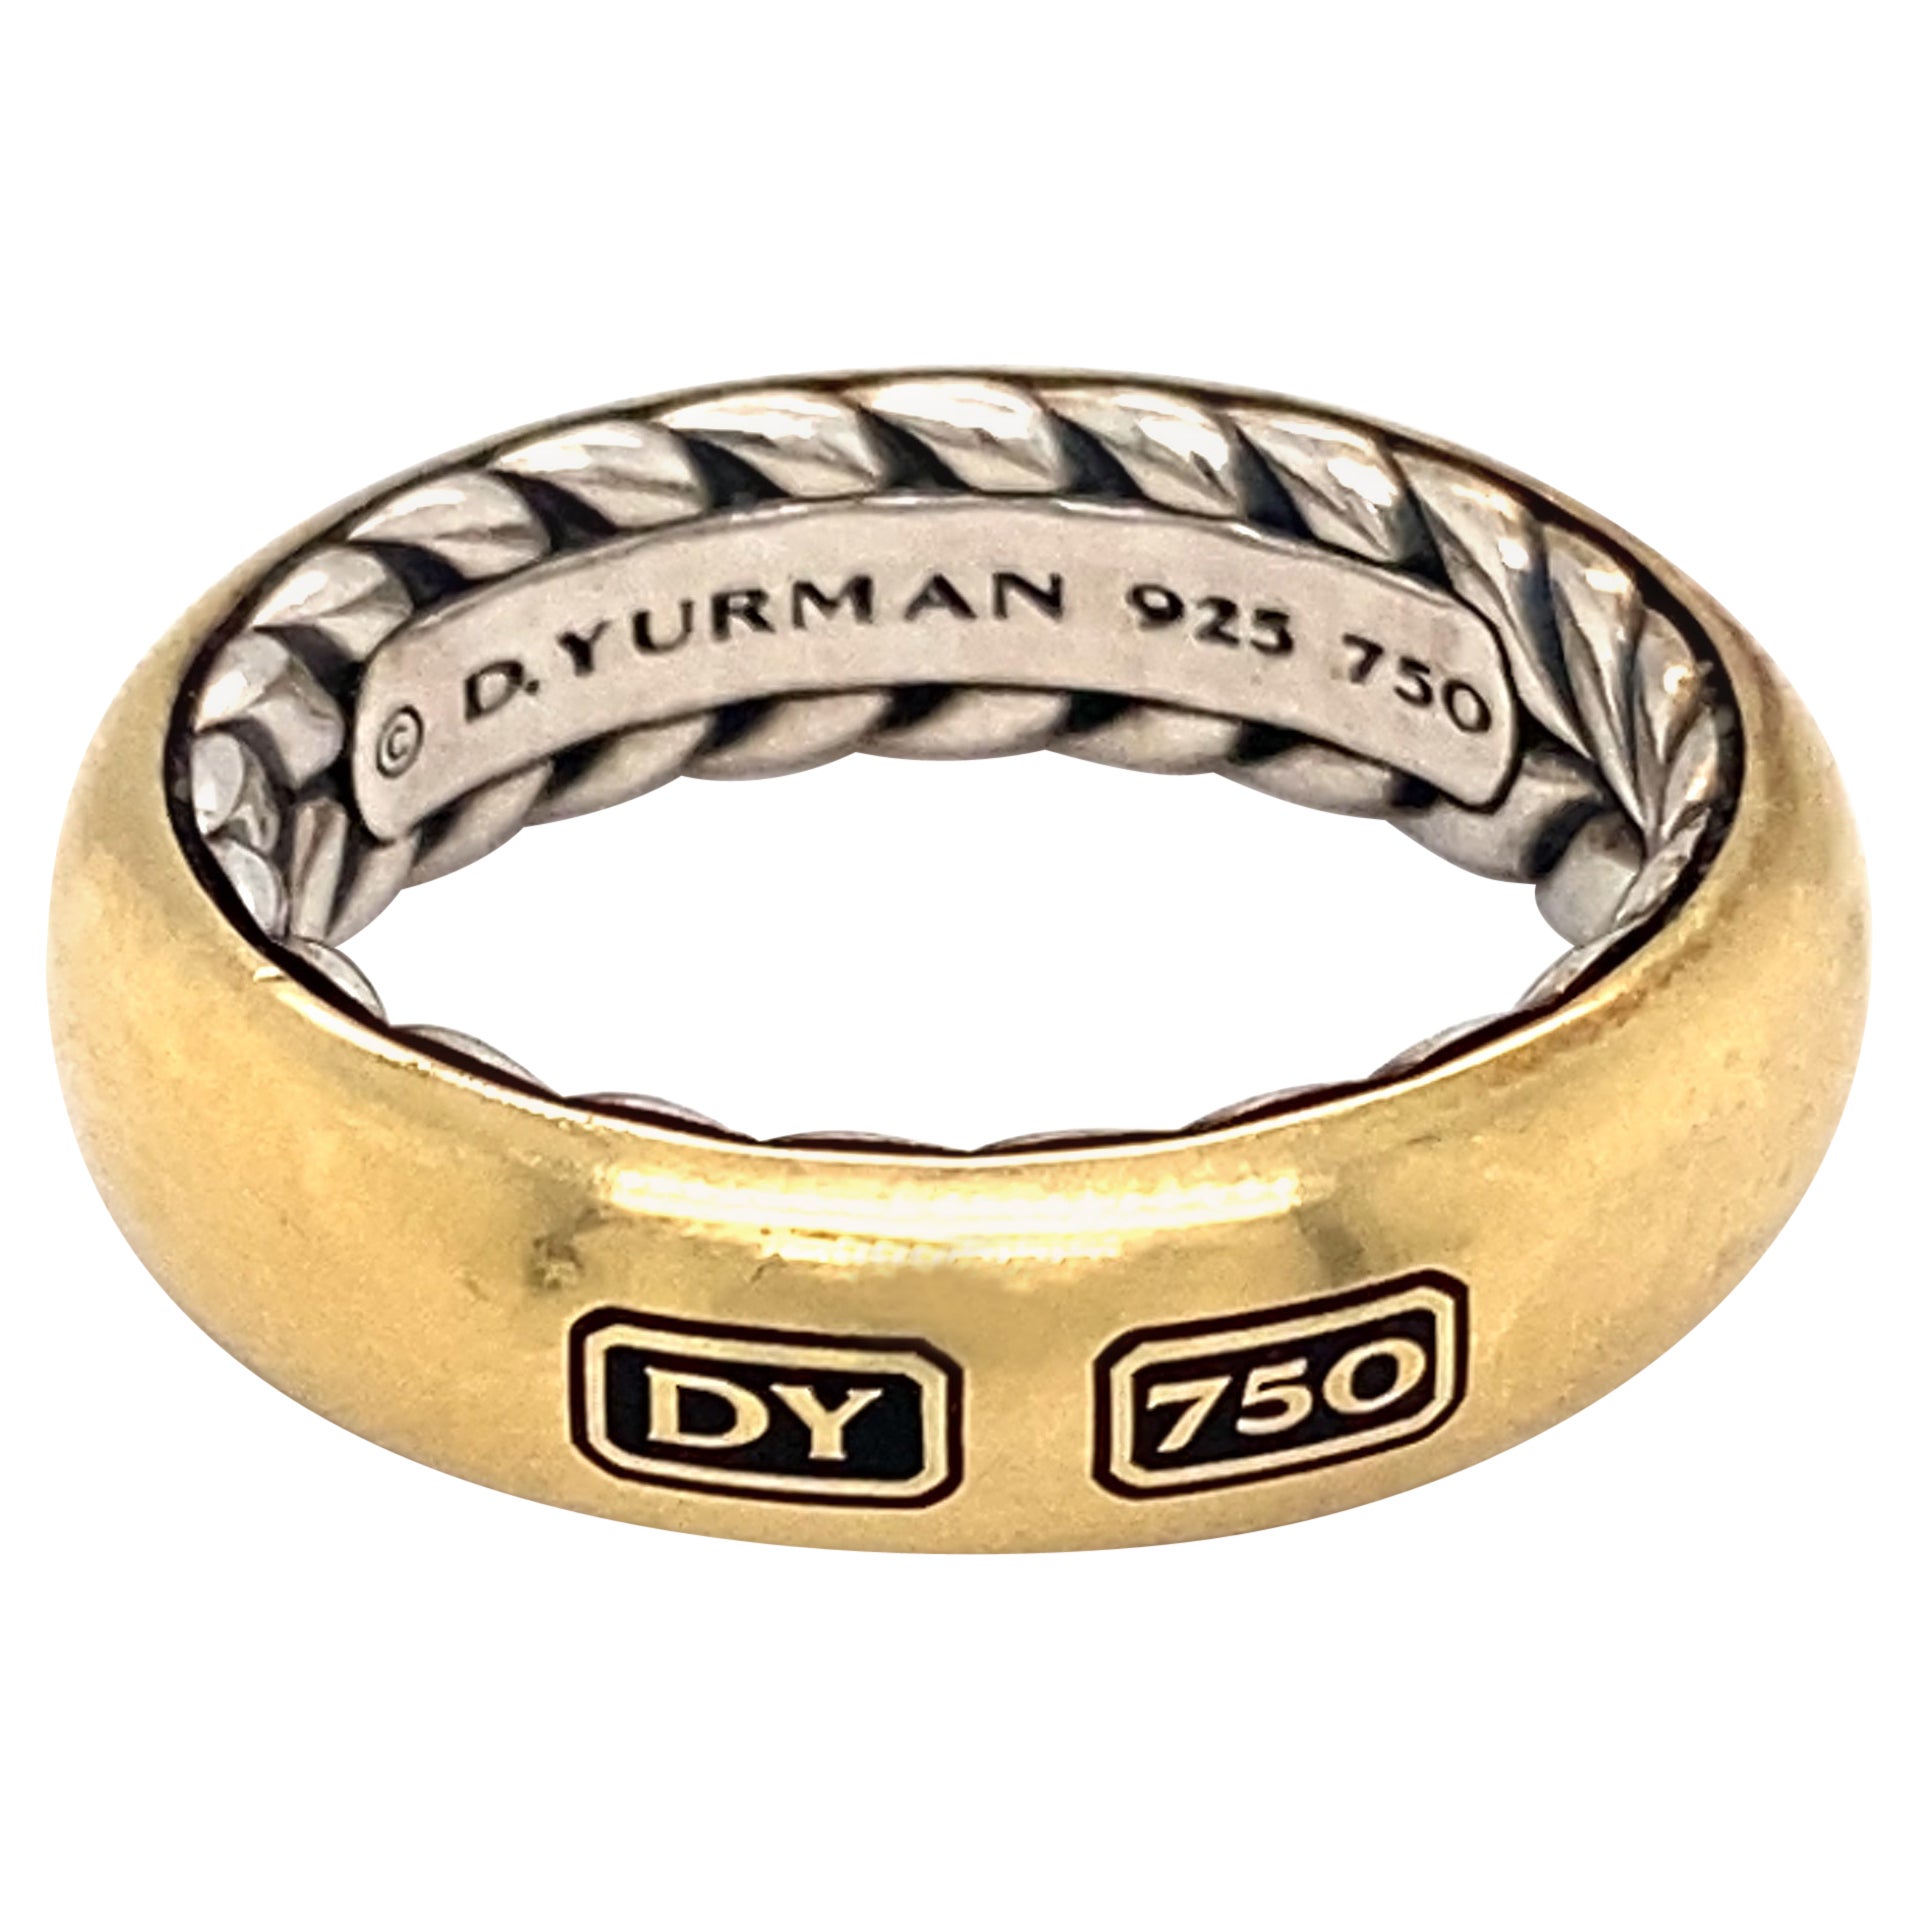 2015 David Yurman Wedding Band 18 Karat Yellow Gold and Sterling Silver For Sale